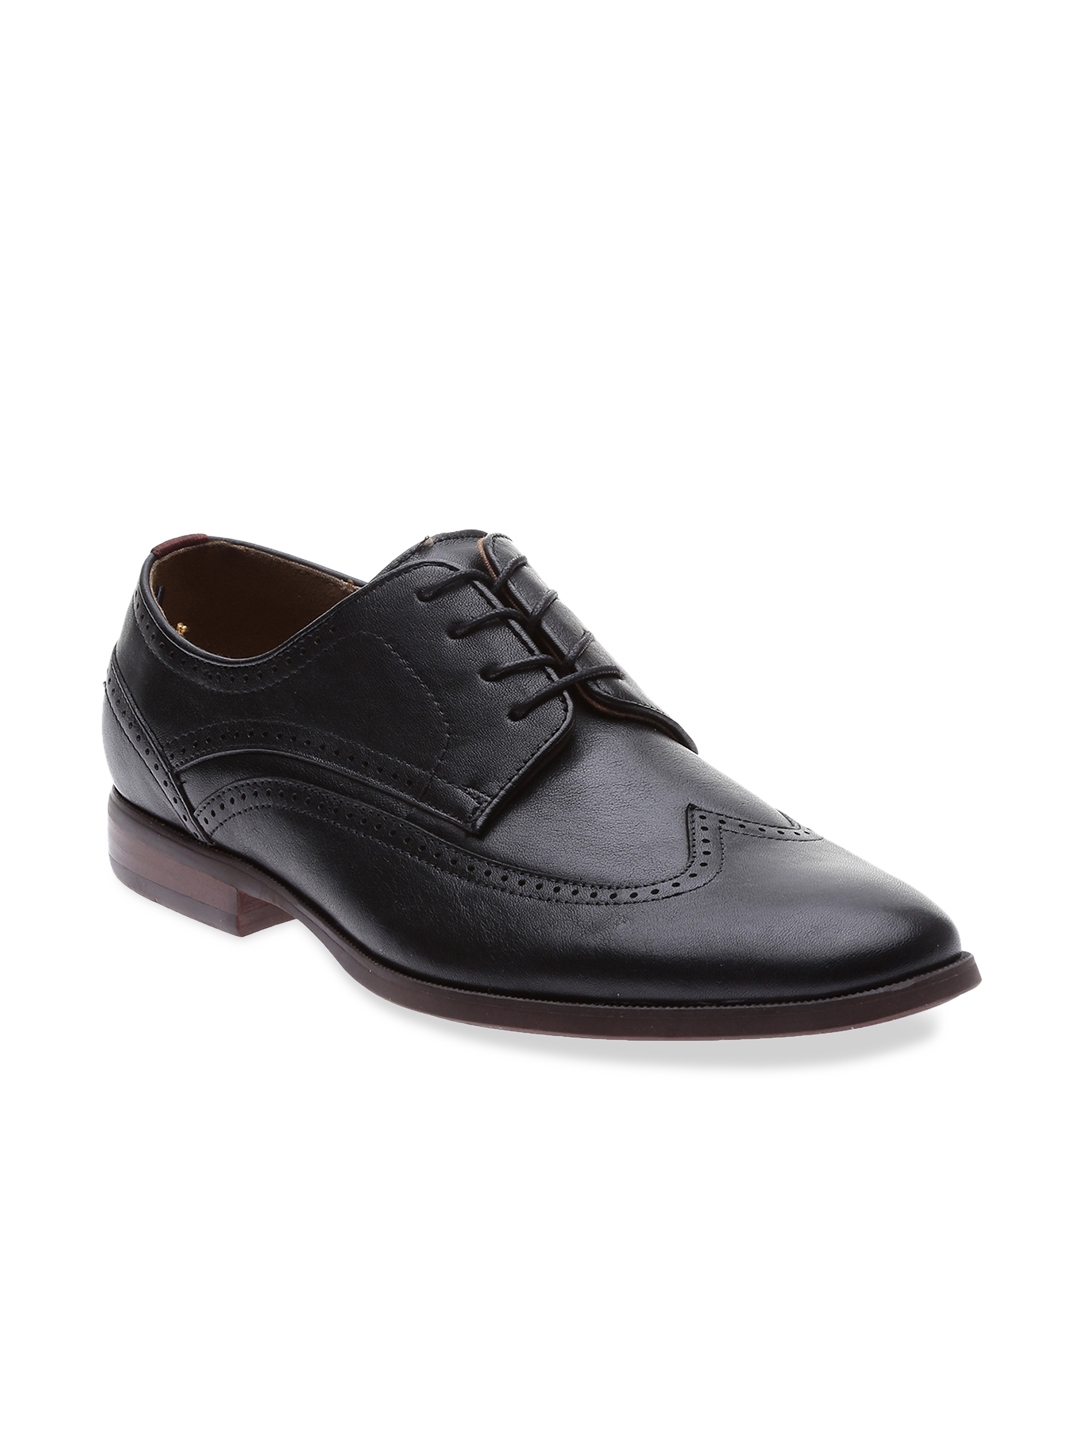 Buy ALDO Men Black Solid Leather Brogues - Casual Shoes for Men 4319287 ...